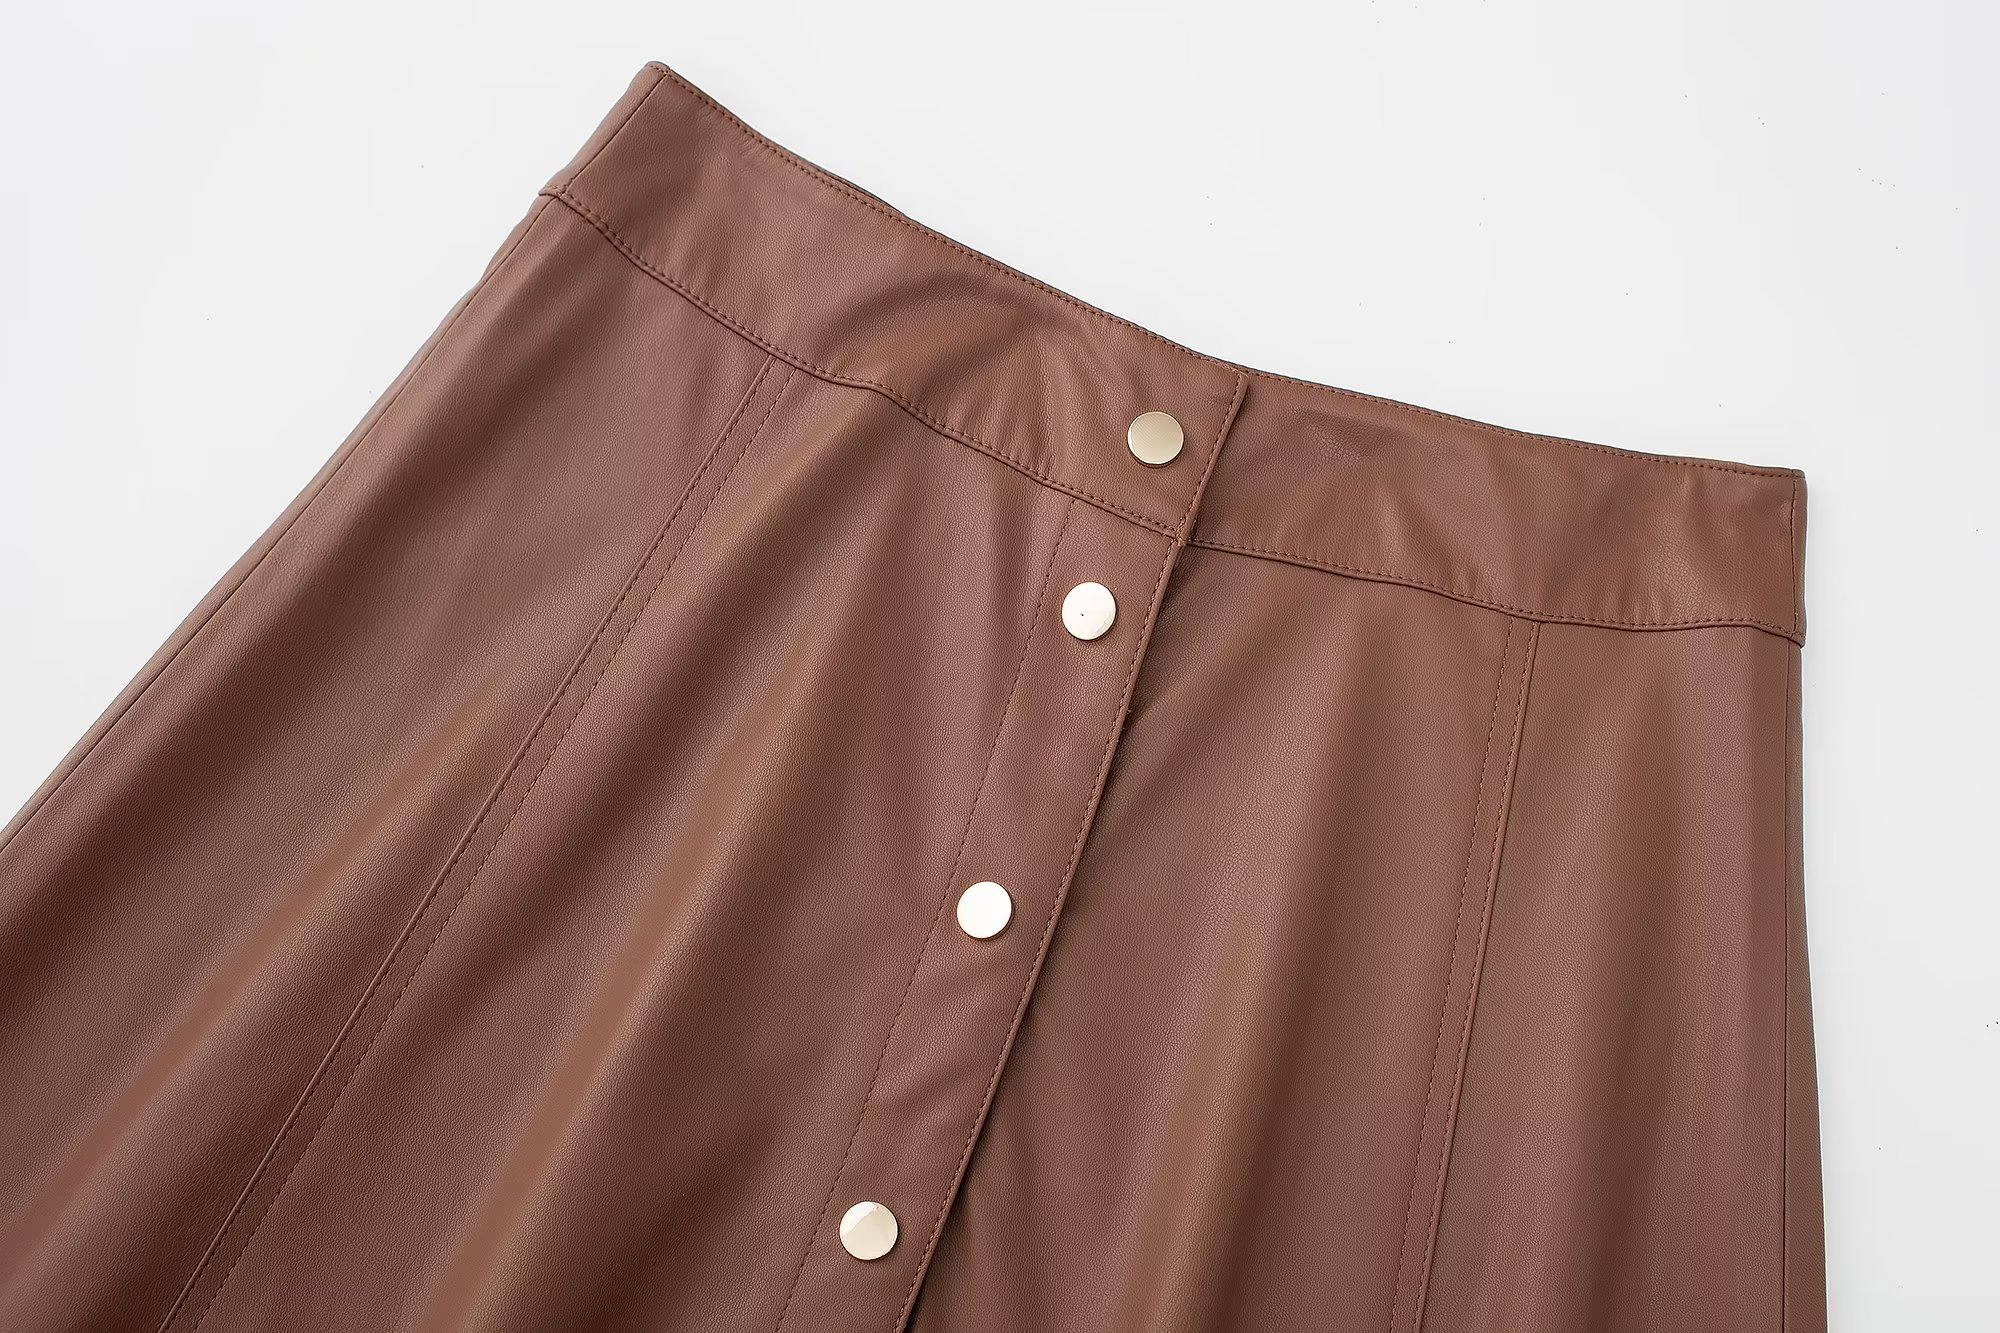 Elegant High Waist Faux Leather Skirt - Skirts - Uniqistic.com